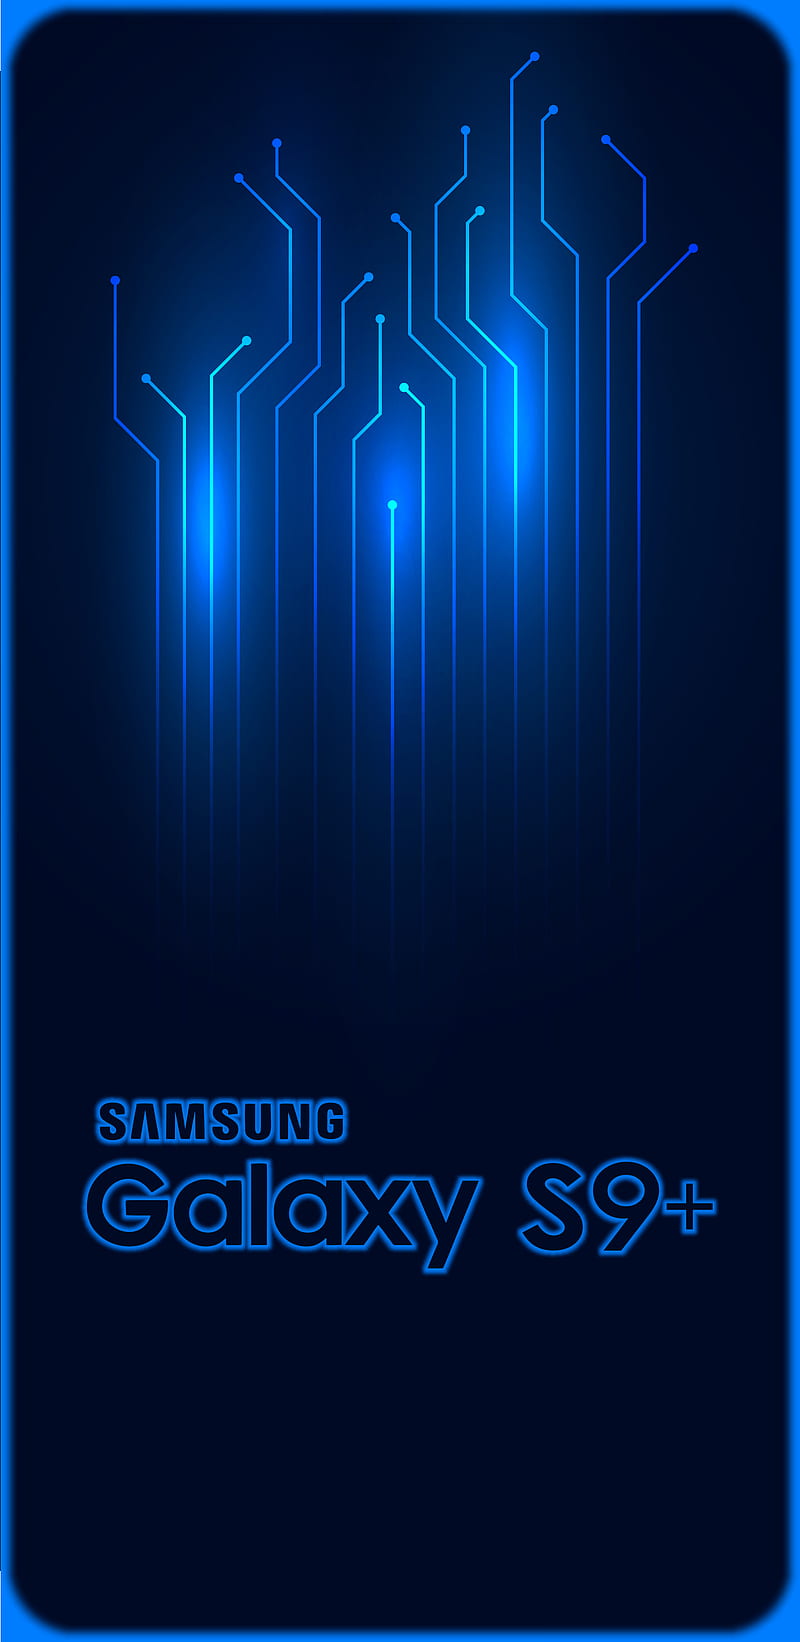 Download Galaxy S9 Stock Wallpapers  Samsung Galaxy S9 Infinity  1280x751  Wallpaper  teahubio